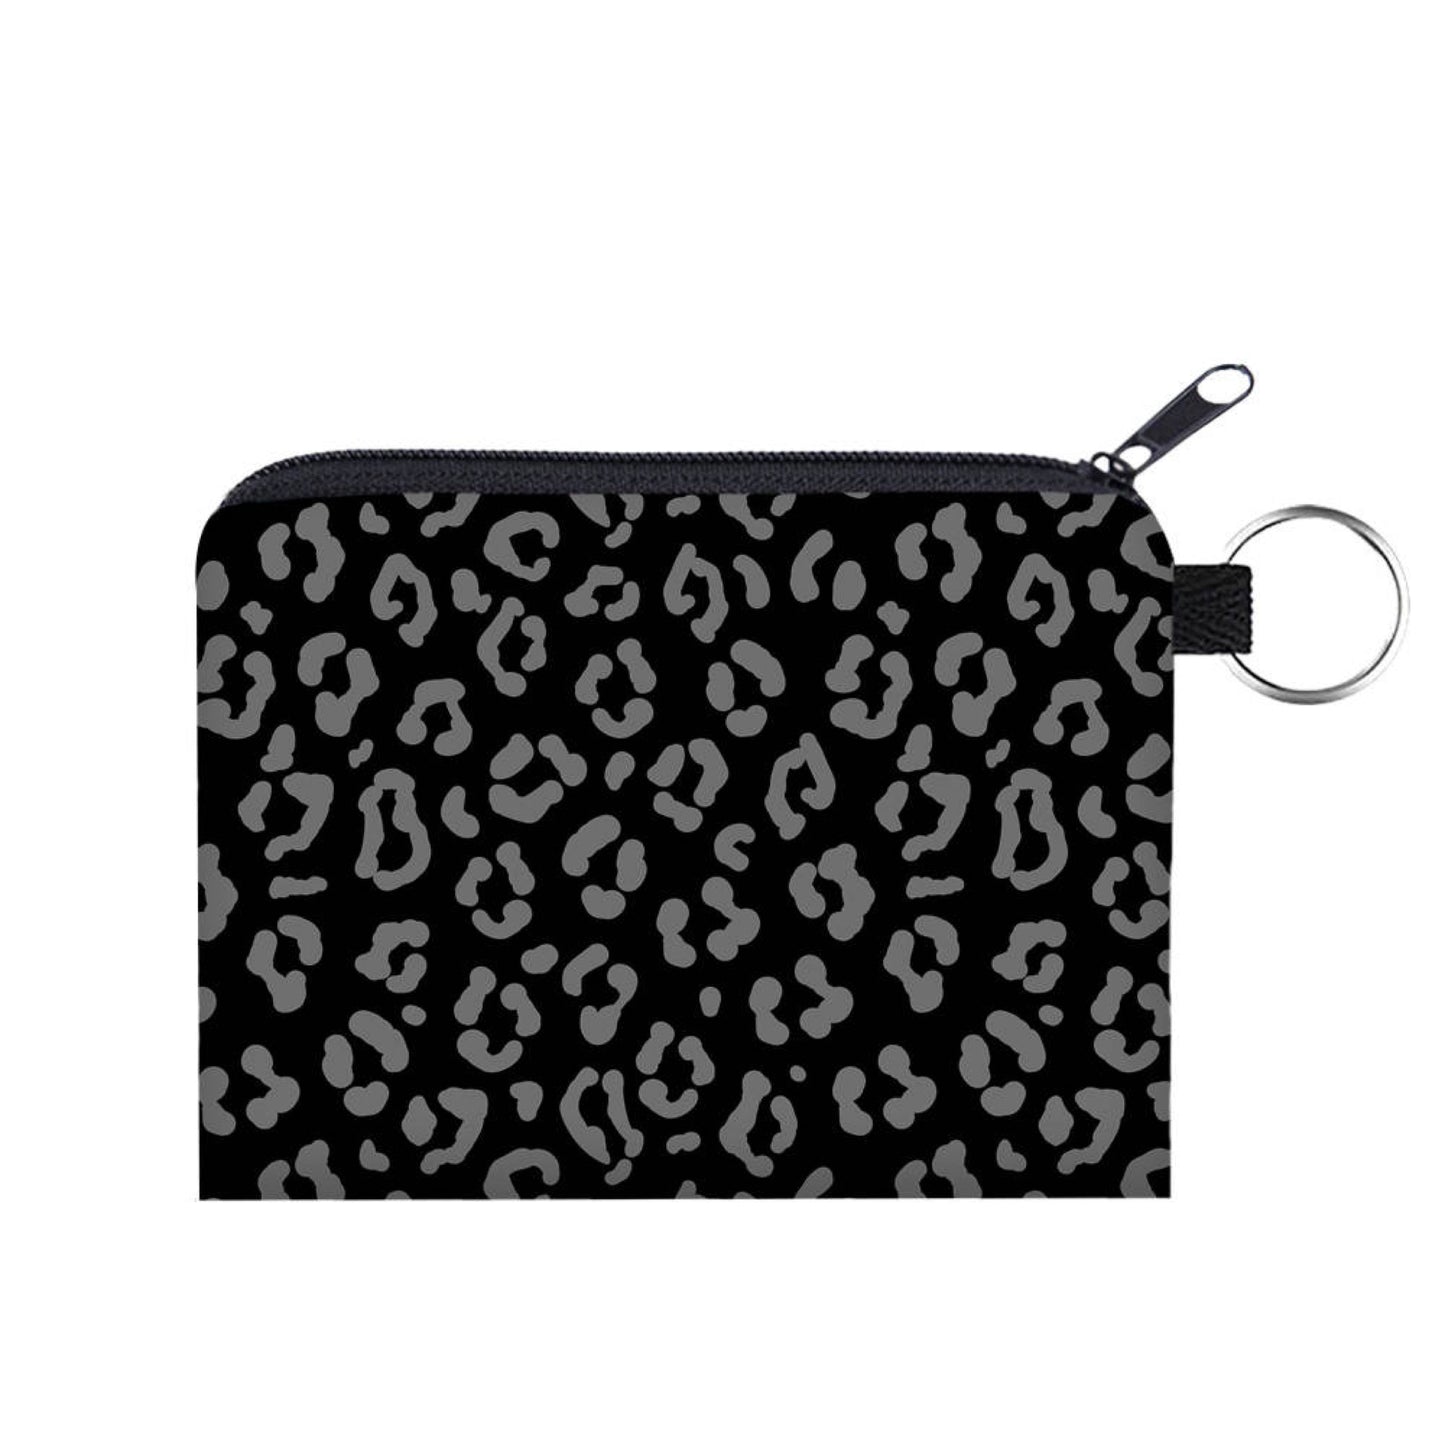 Mini Pouch - Animal Print, Black & Grey Leopard